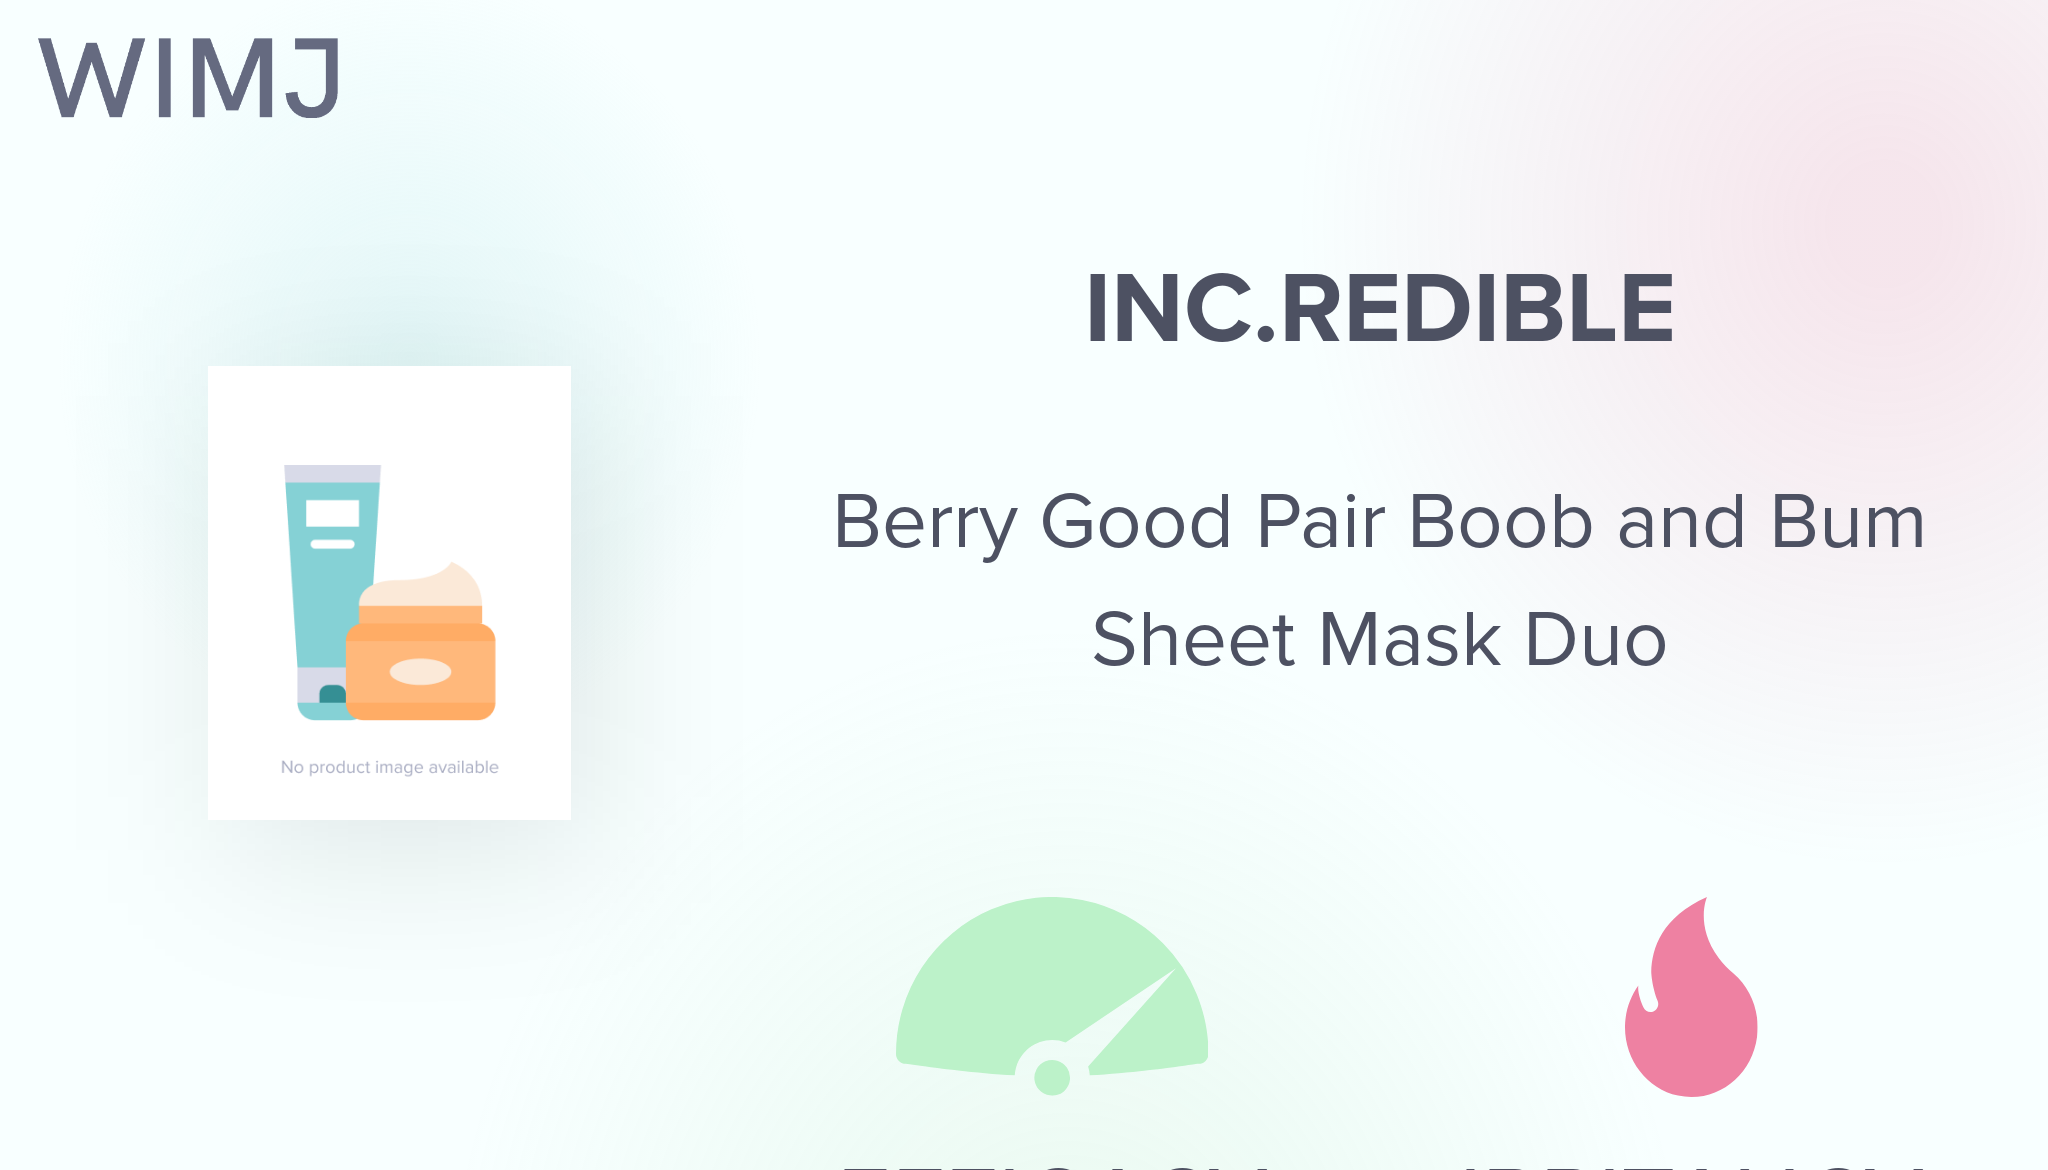 INC.redible INC. redible Baddie Double Perks Rainbow Sheet Boob Mask 0.5 fl  oz/ 15ml Reviews 2024